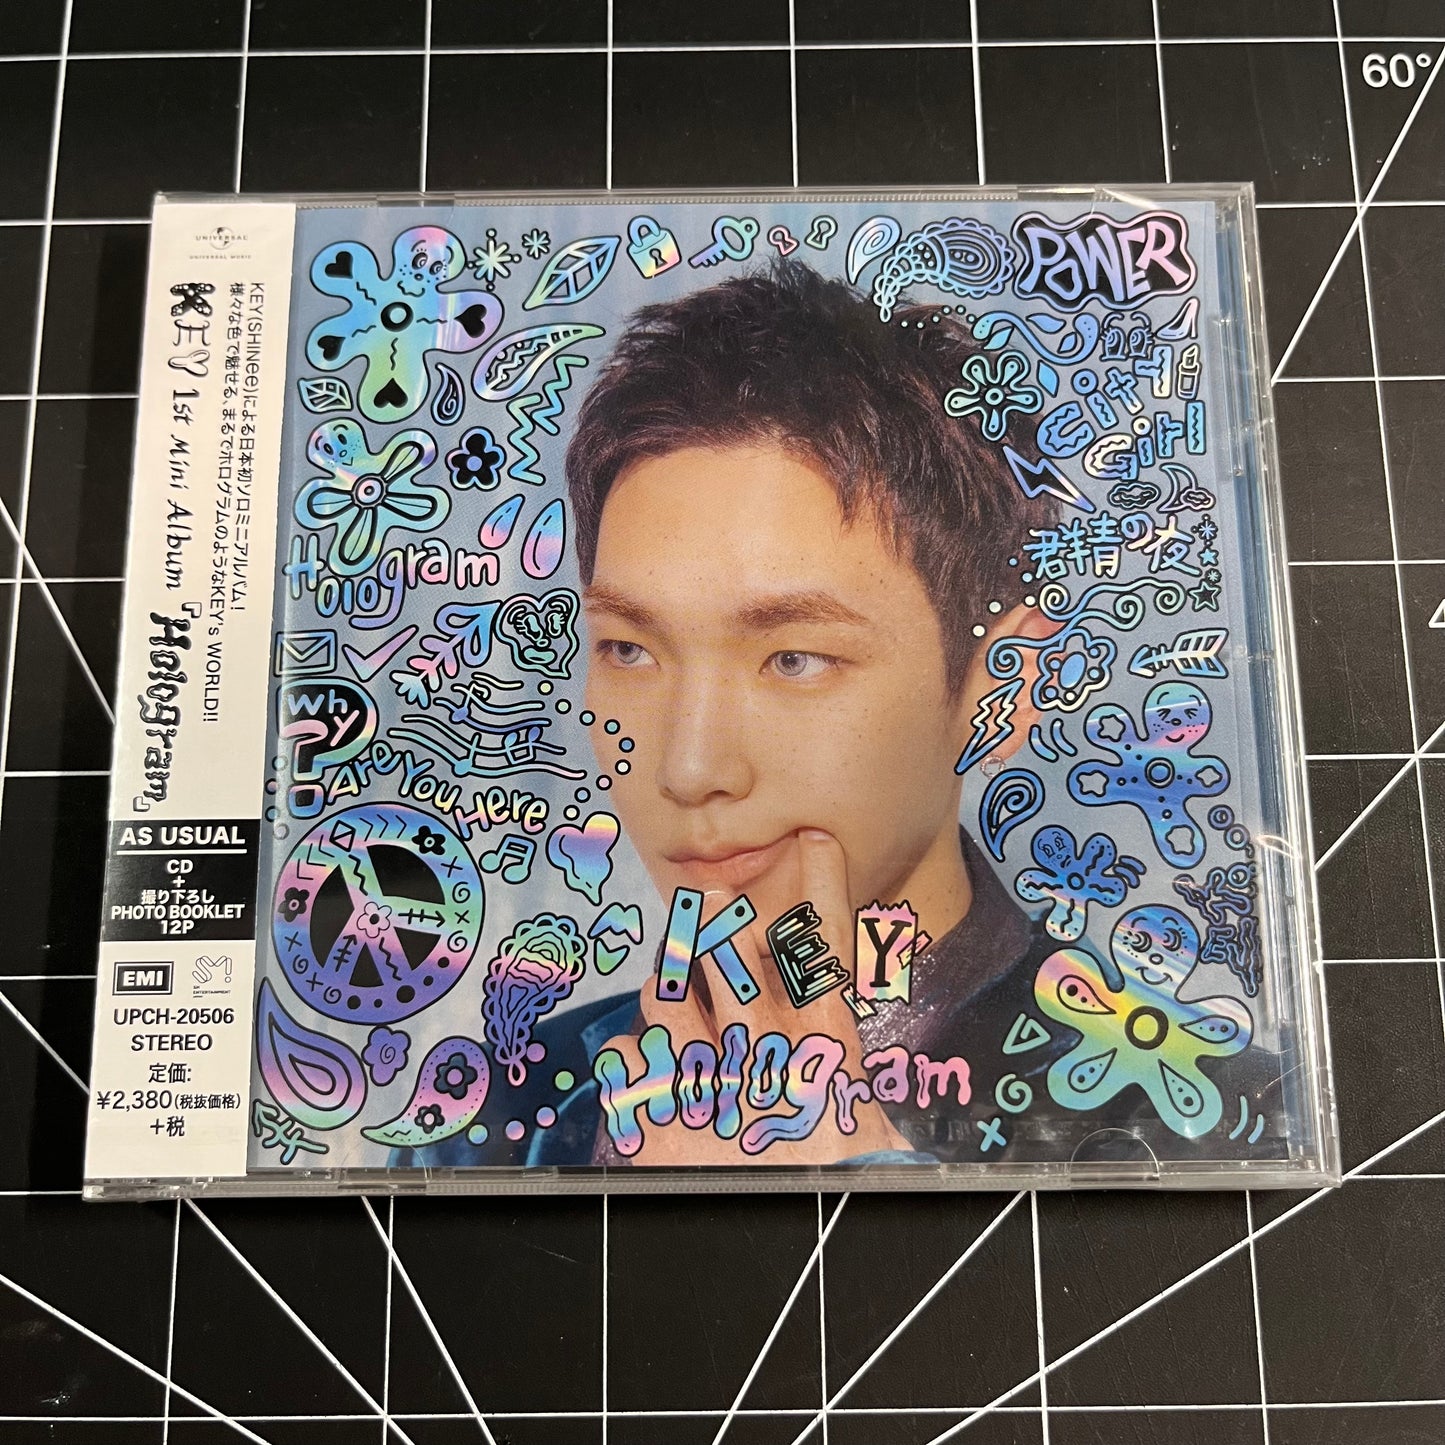 Key The 1st Mini Japanese Album HOLOGRAM (Regular Edition)